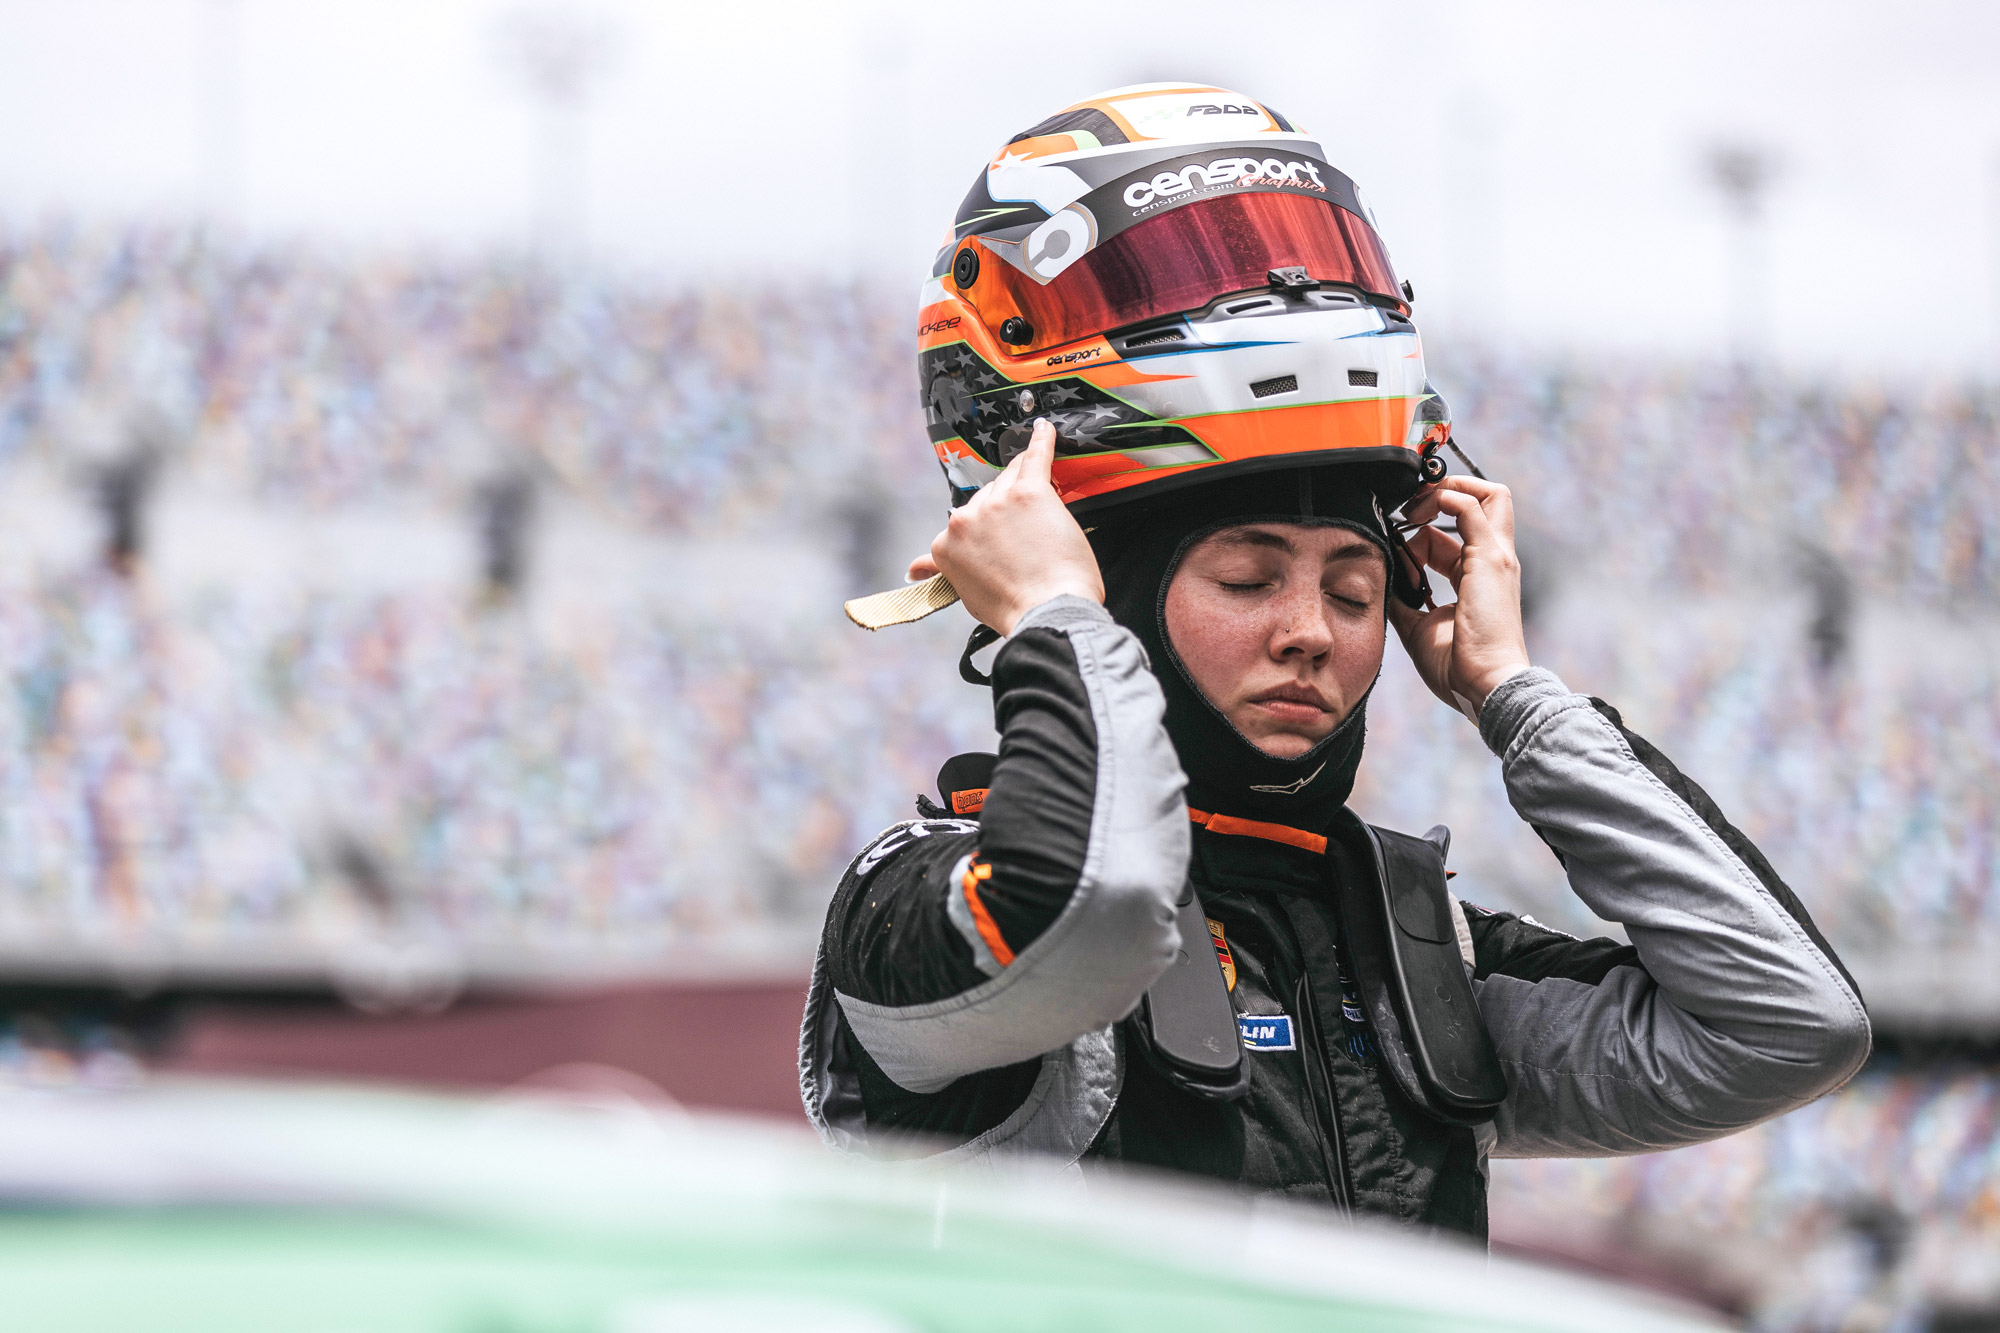 A woman puts on a racing helmet